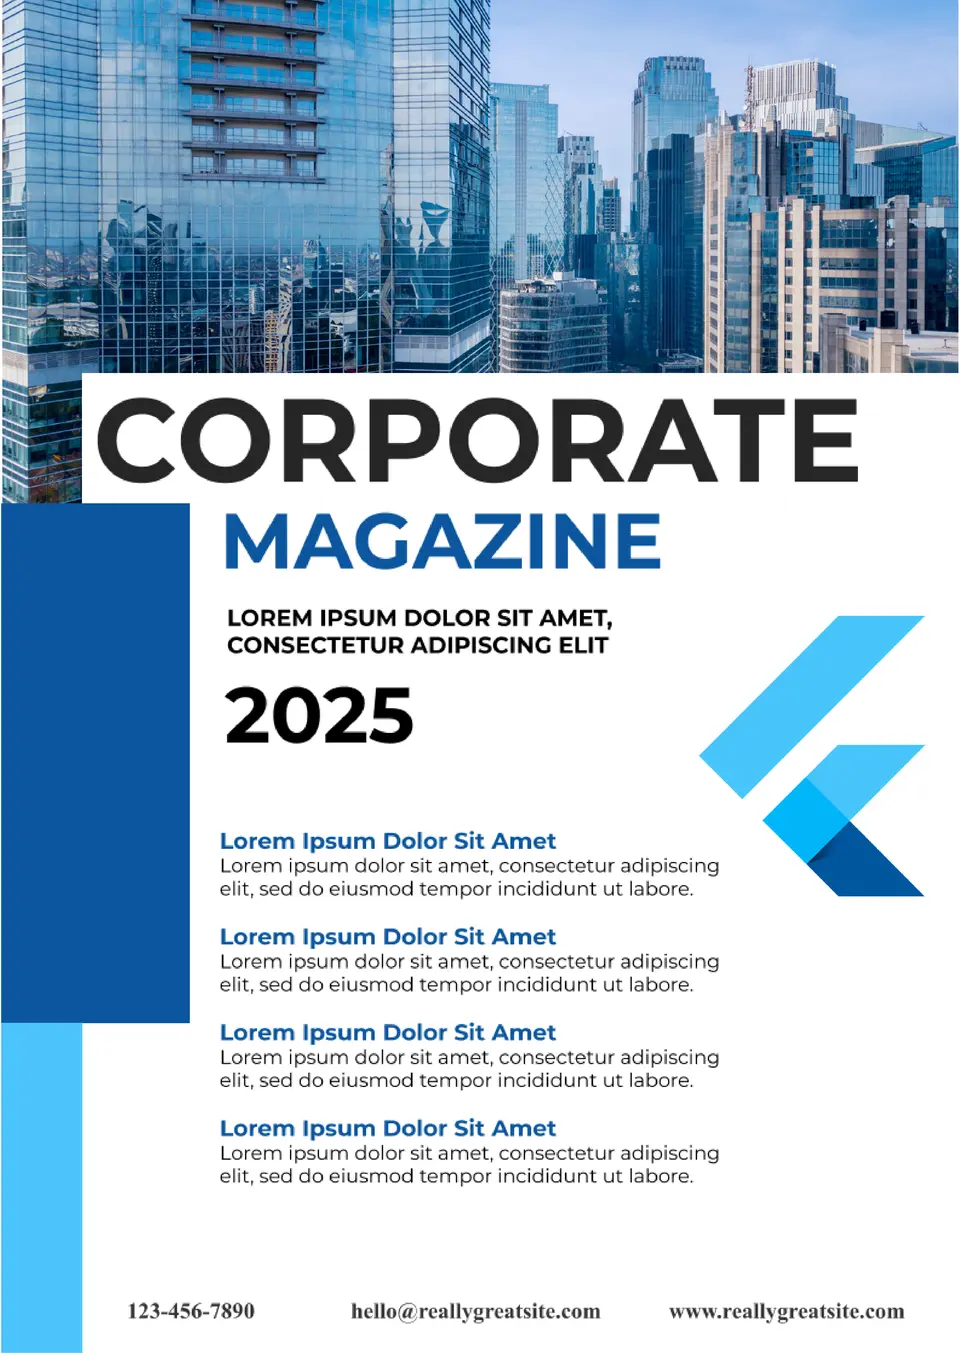 Corporate Magazine Template